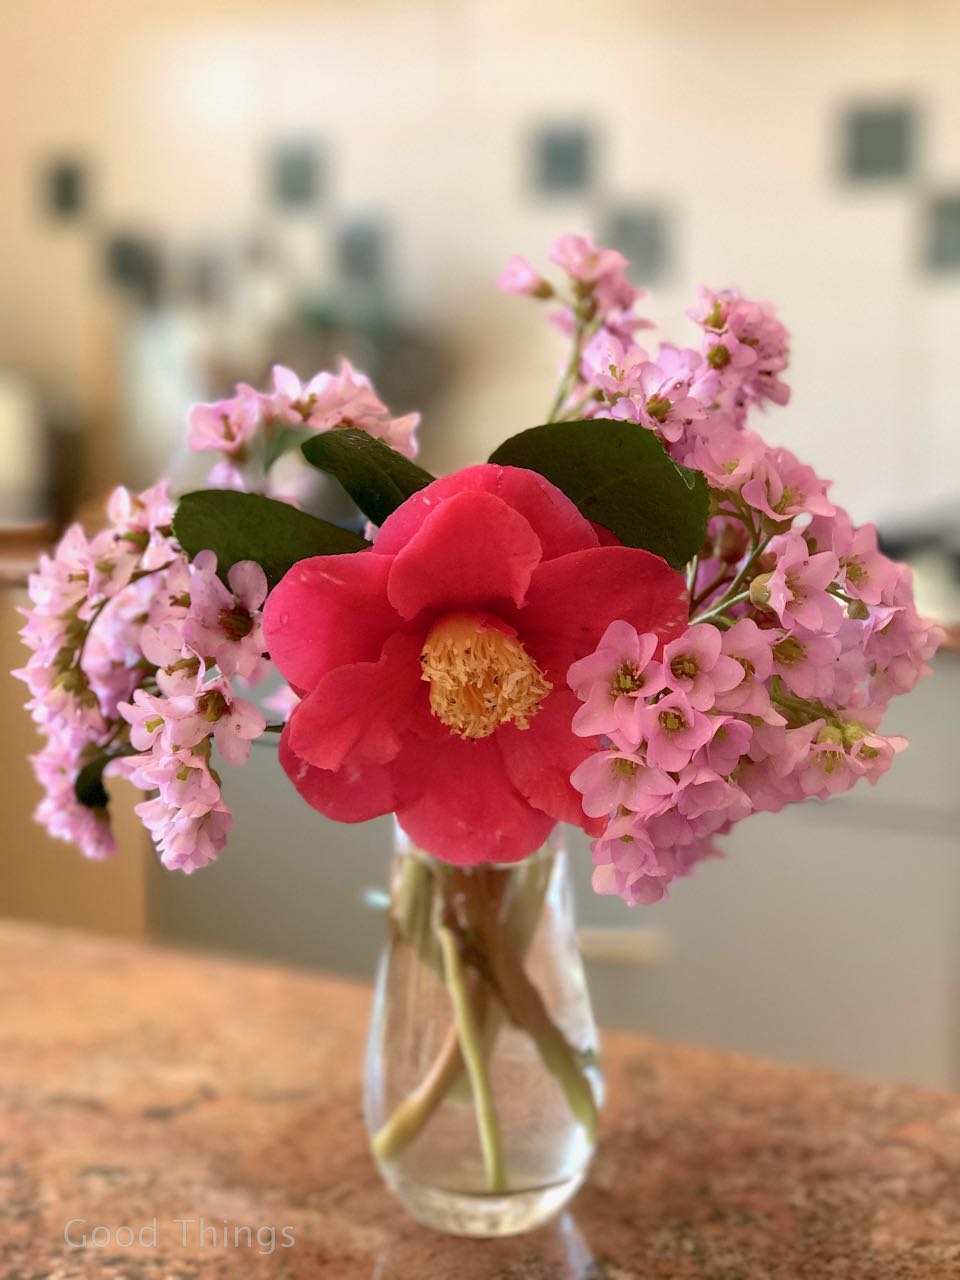 Fresh flowers from my garden - Liz Posmyk, Good Things